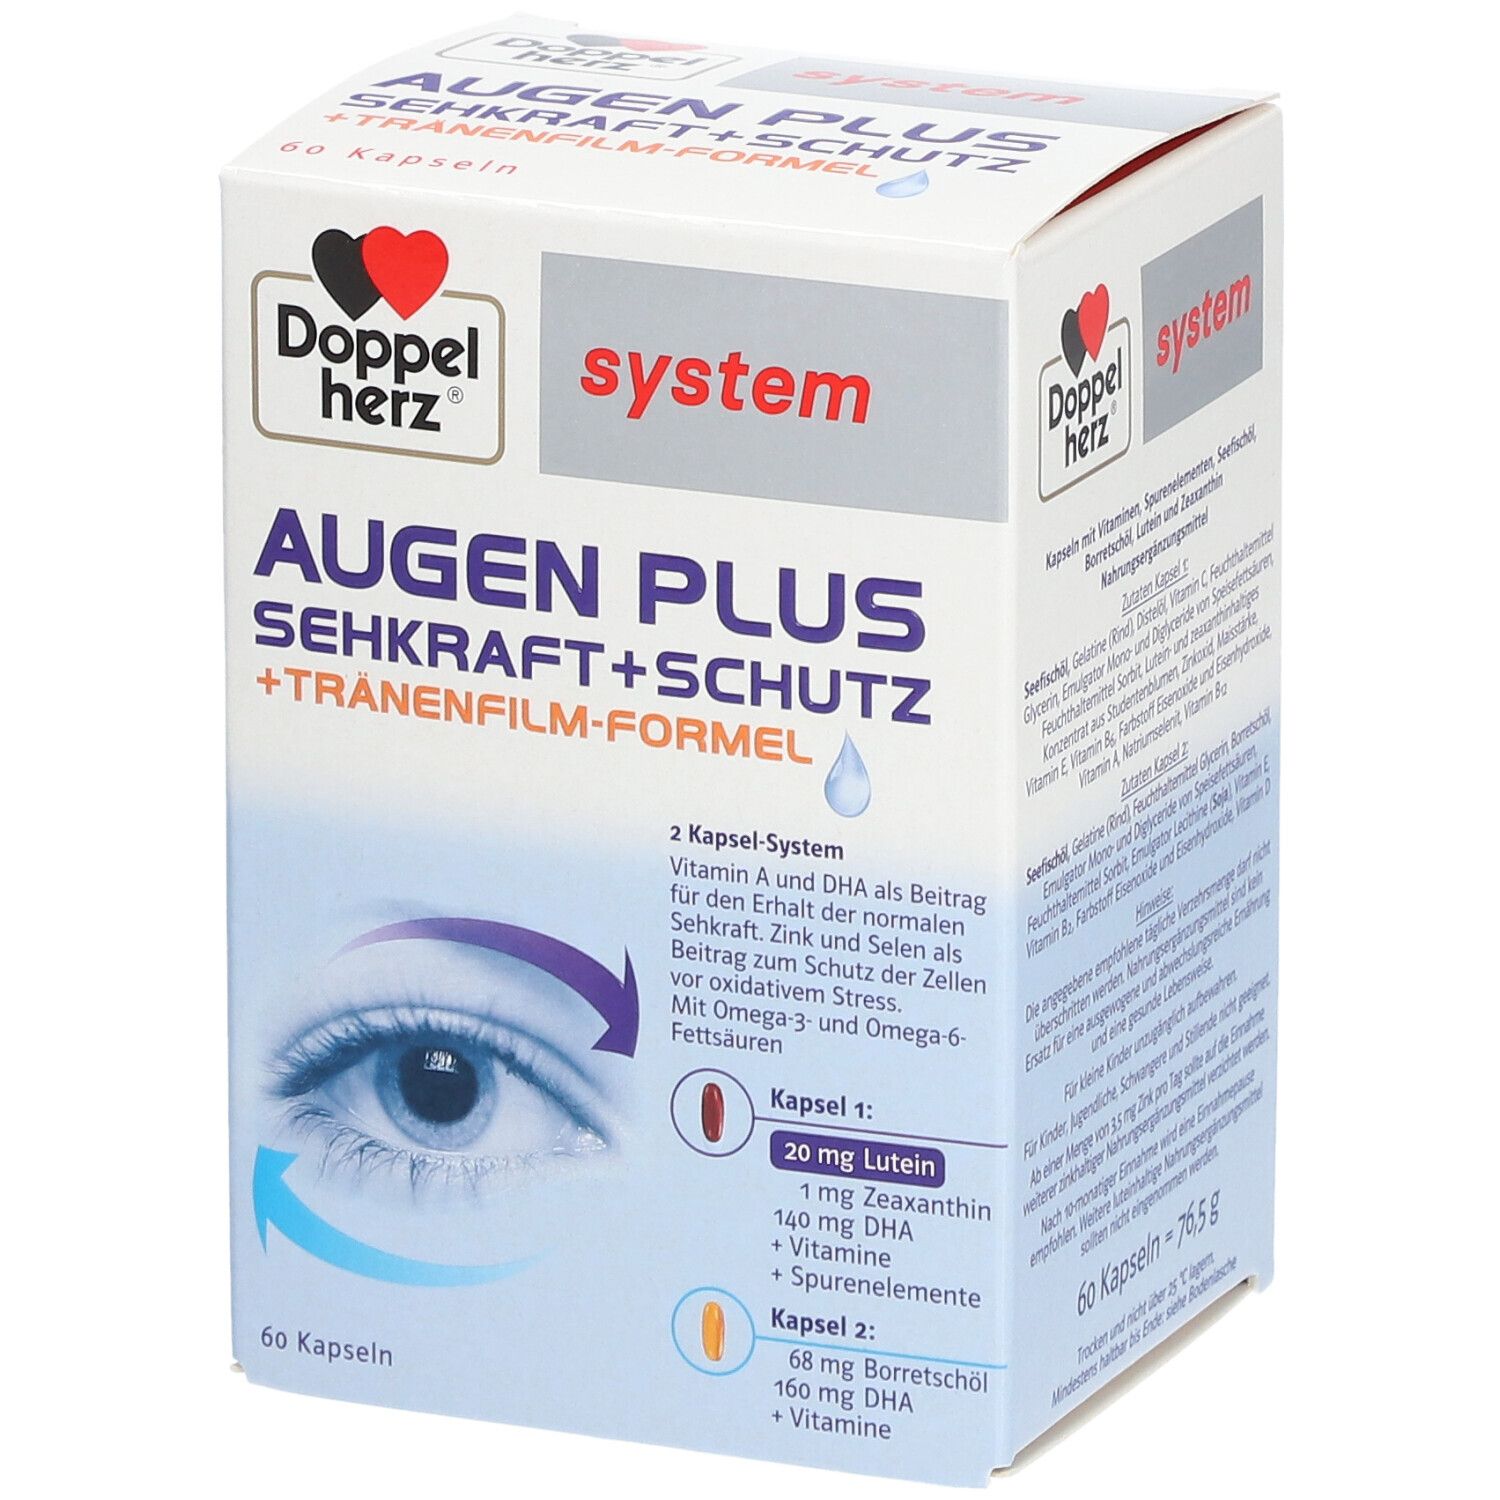 Doppelherz® system AUGEN PLUS SEHKRAFT + SCHUTZ 60 St - shop-apotheke.com